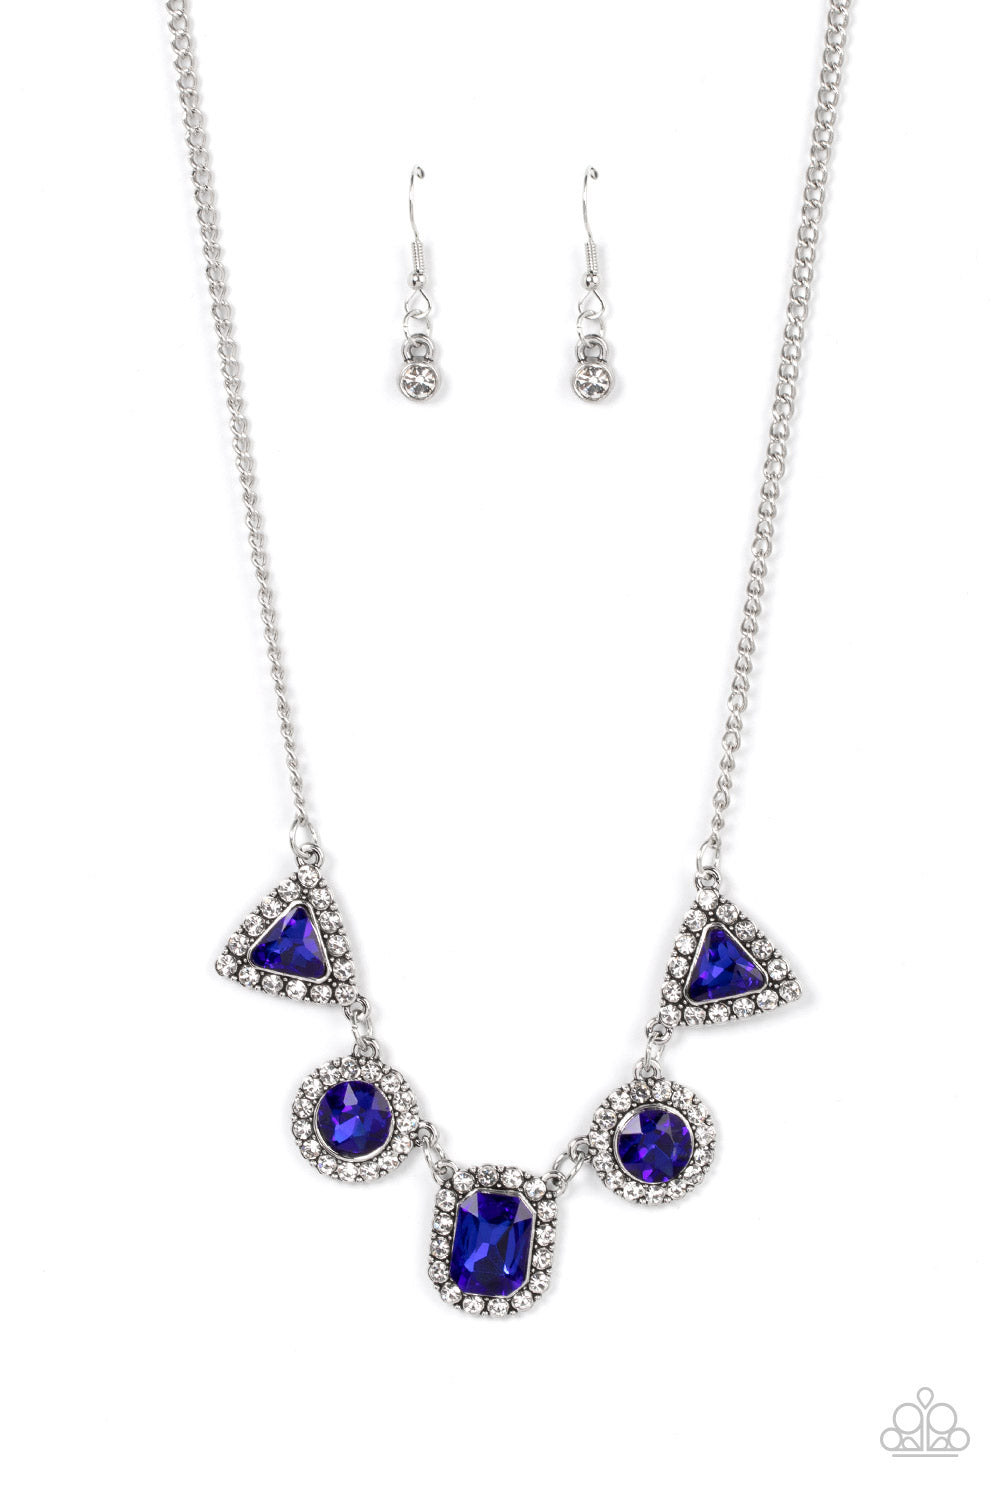 Posh Party Avenue - Blue Rhinestone Necklace - Paparazzi Accessories